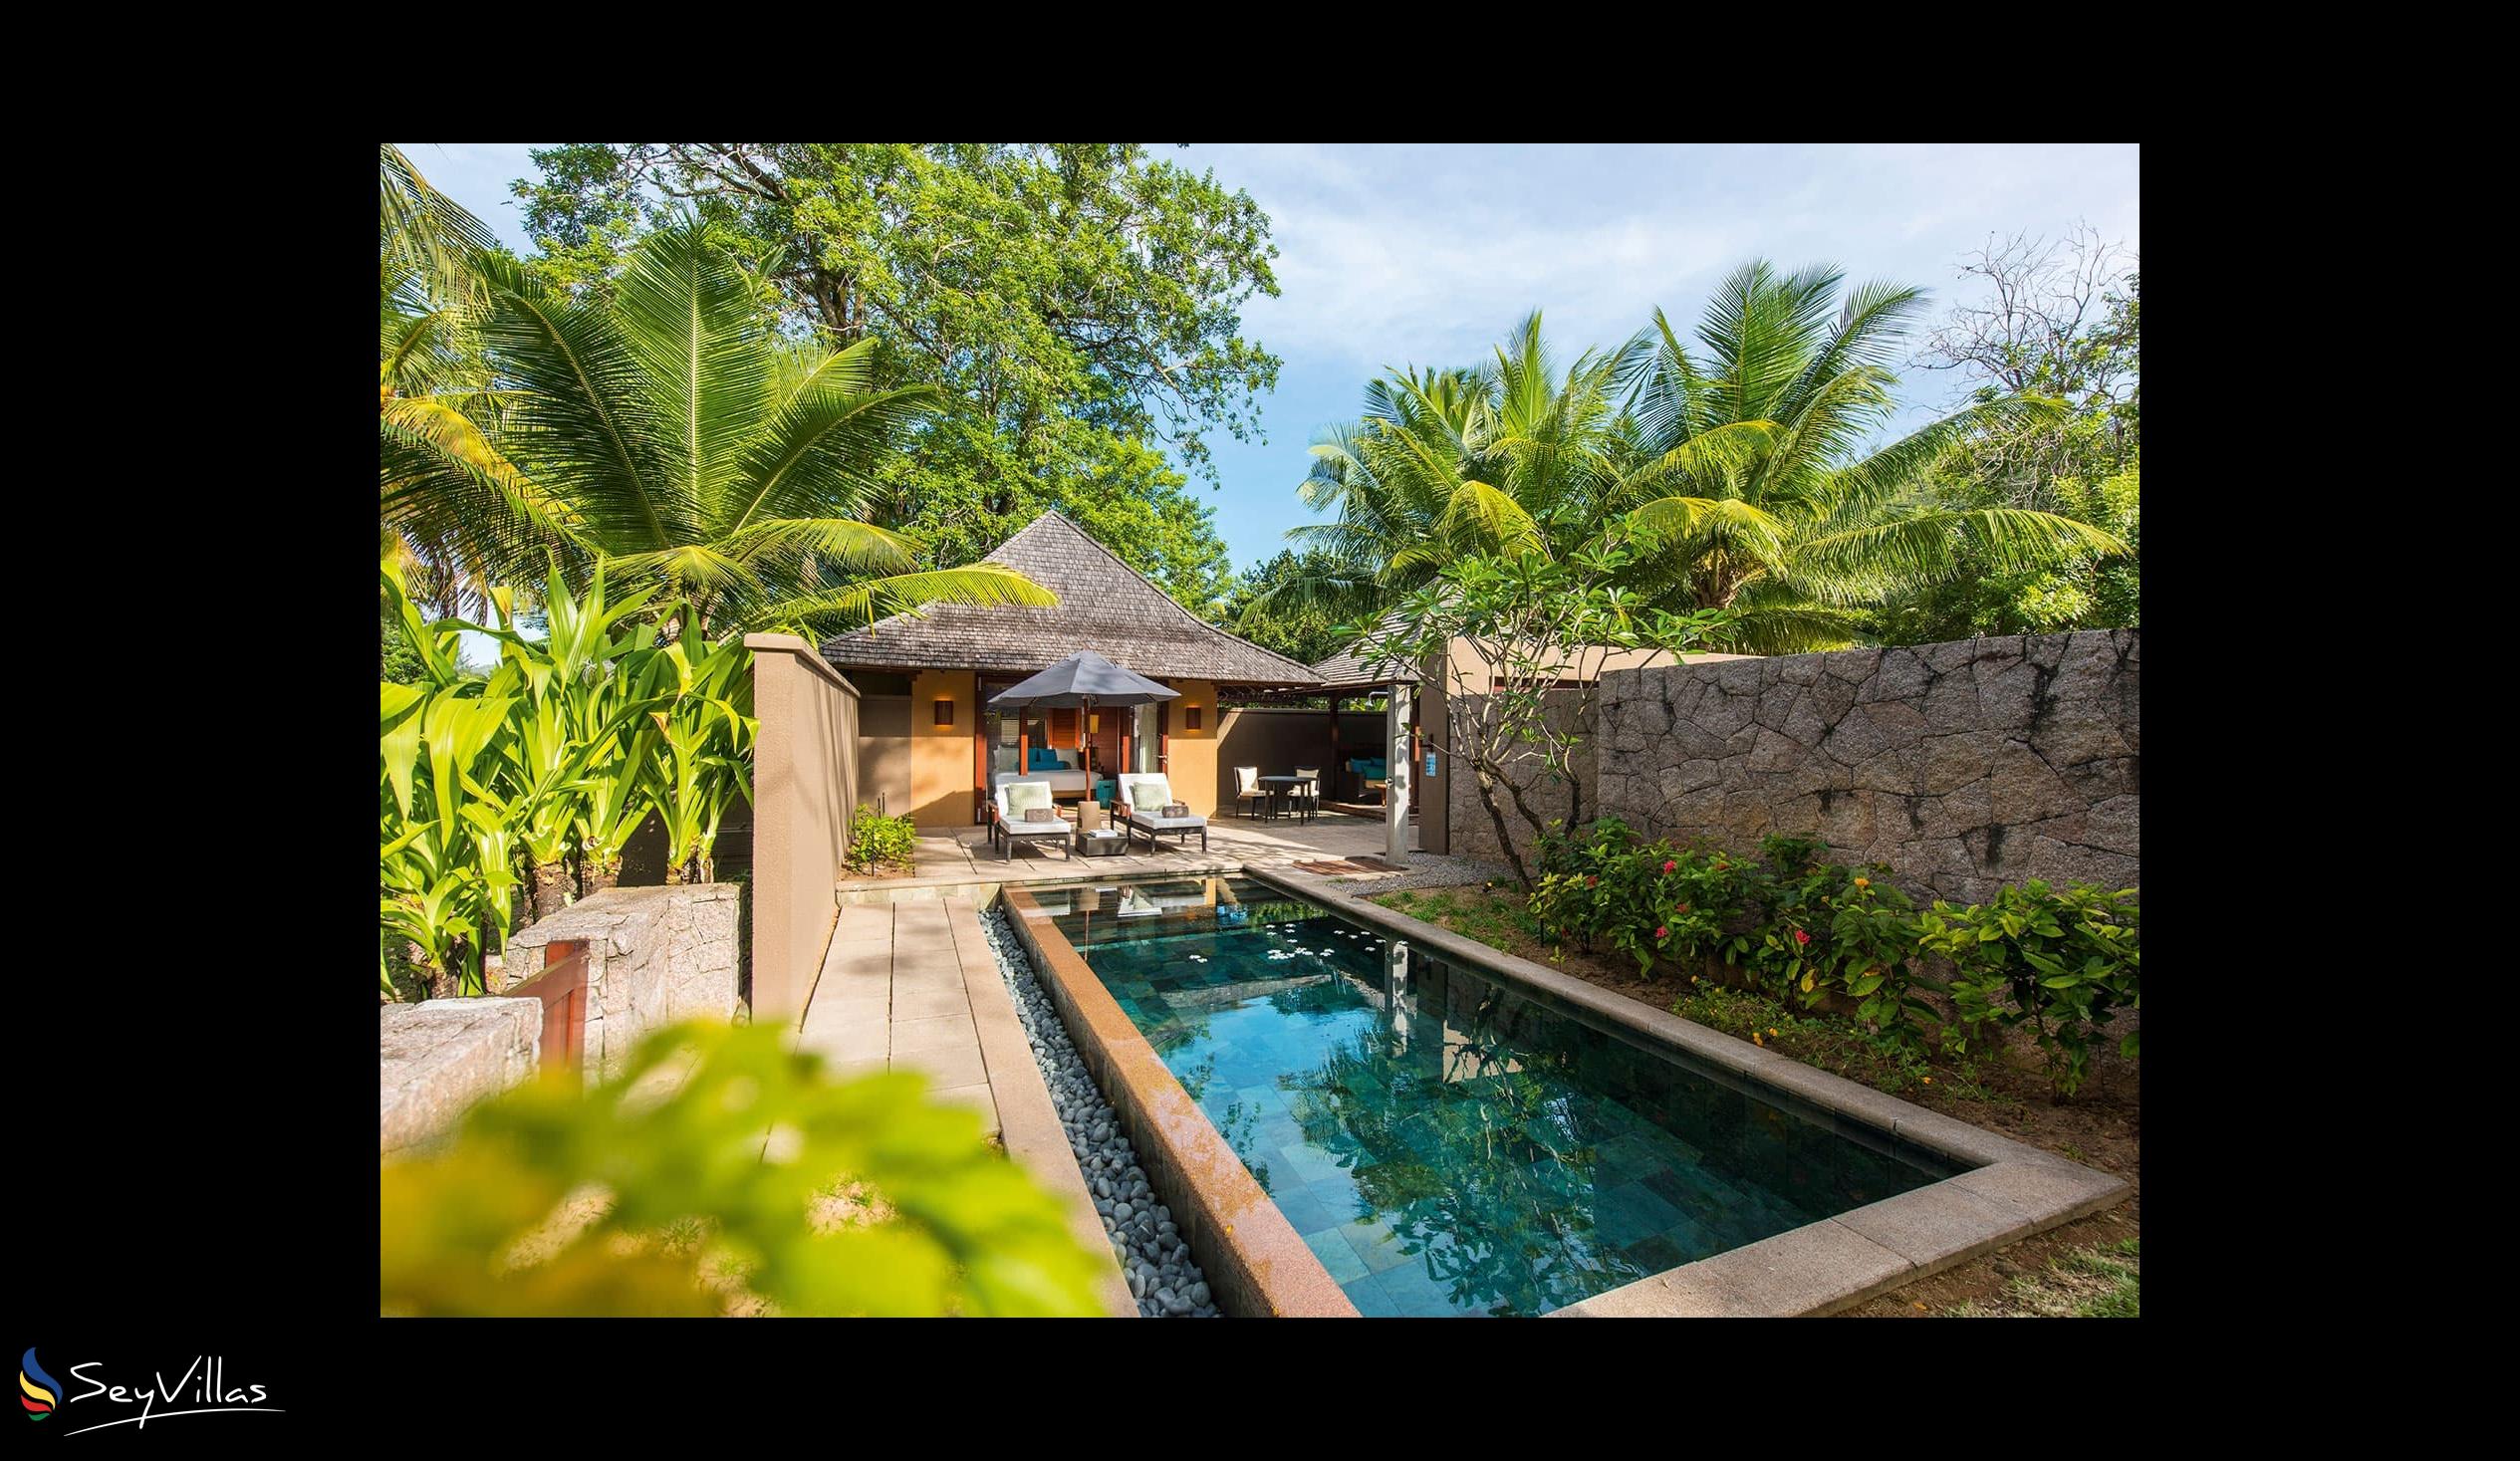 Photo 90: Constance Ephelia Seychelles - 1-Bedroom Beach Villa - Mahé (Seychelles)